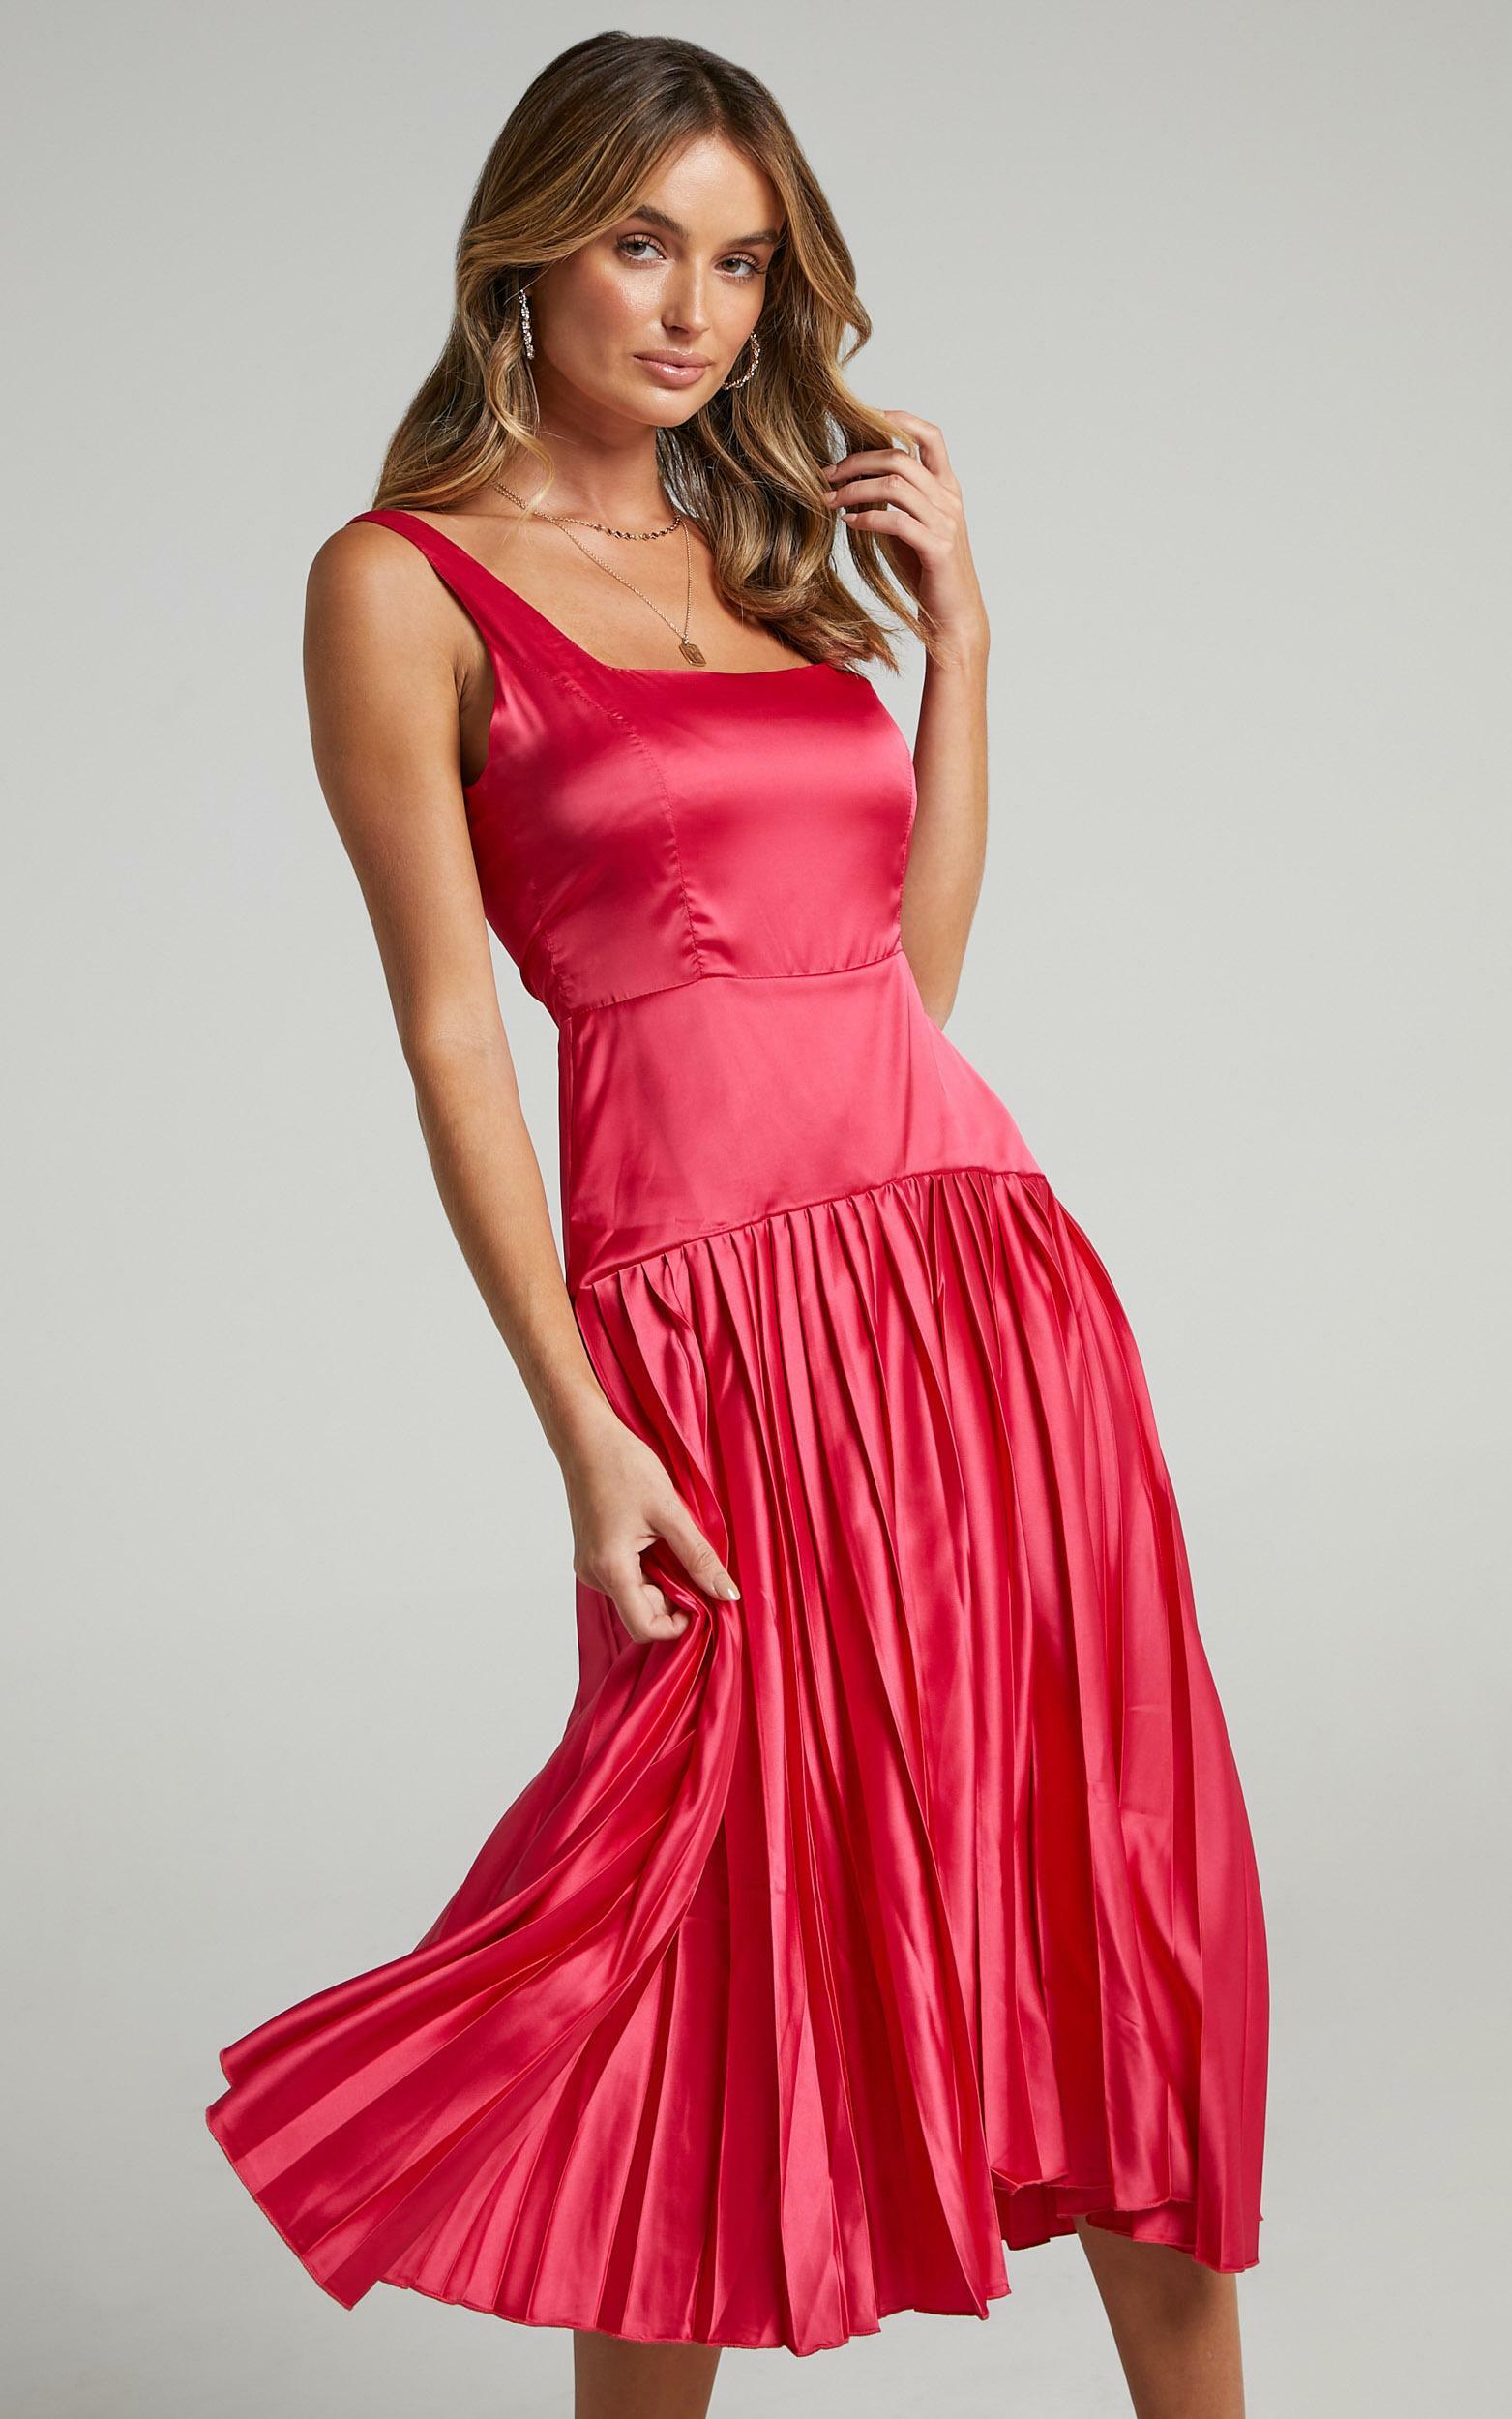 Sassa Dress in Hot Pink - 06, PNK2, hi-res image number null